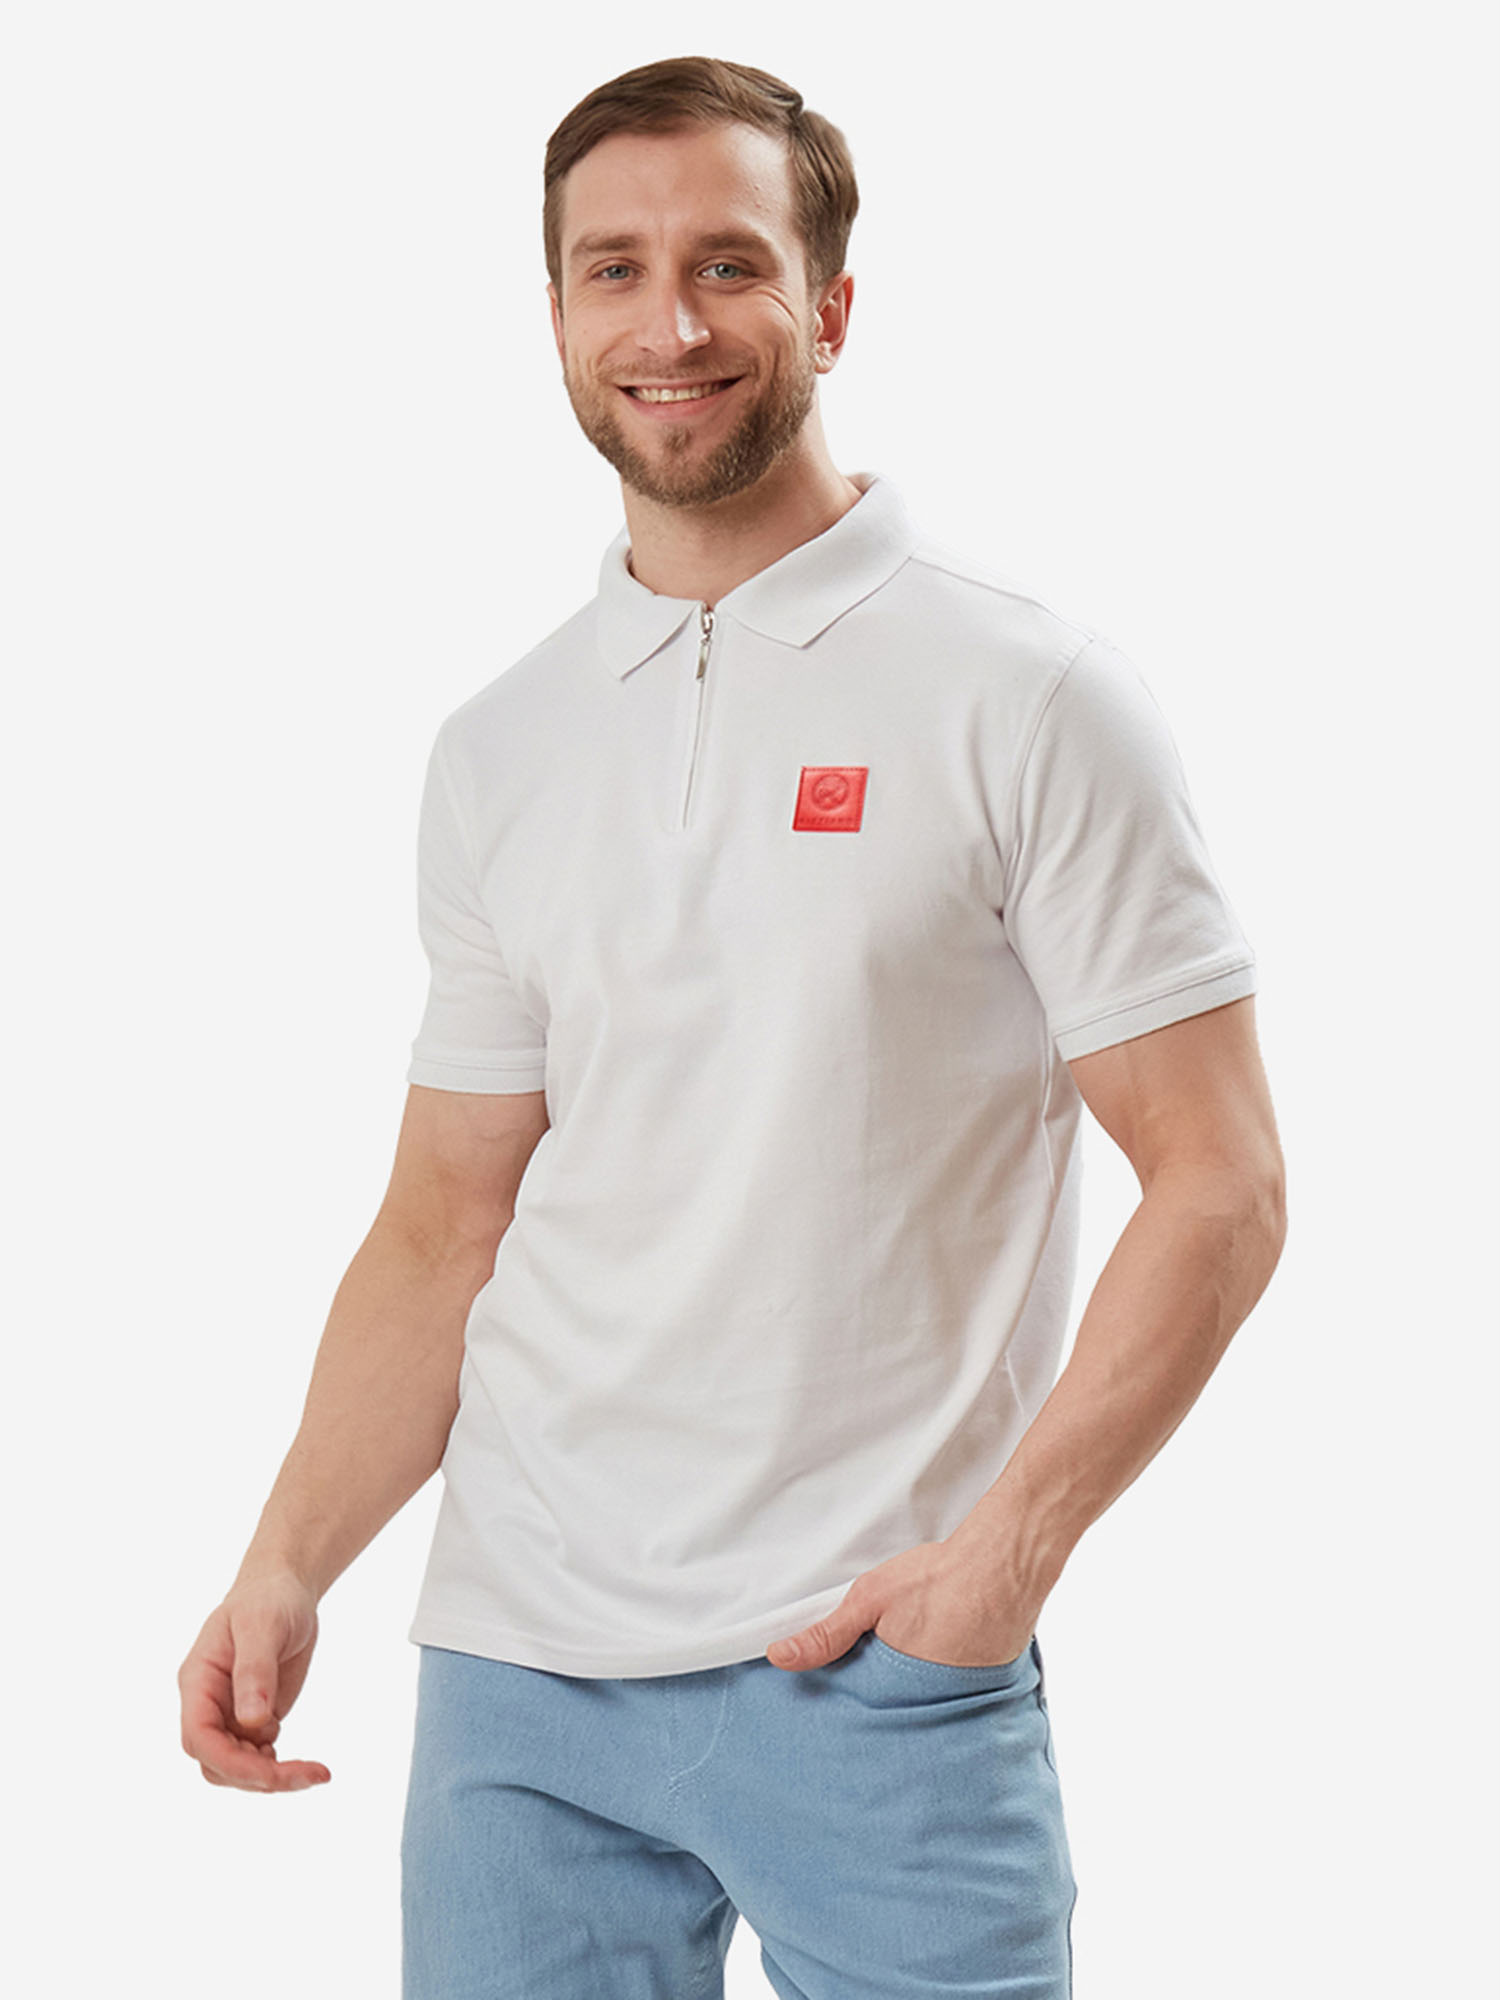 Рубашка поло мужское с короткий рукавом спортивное Rizziano, Белый